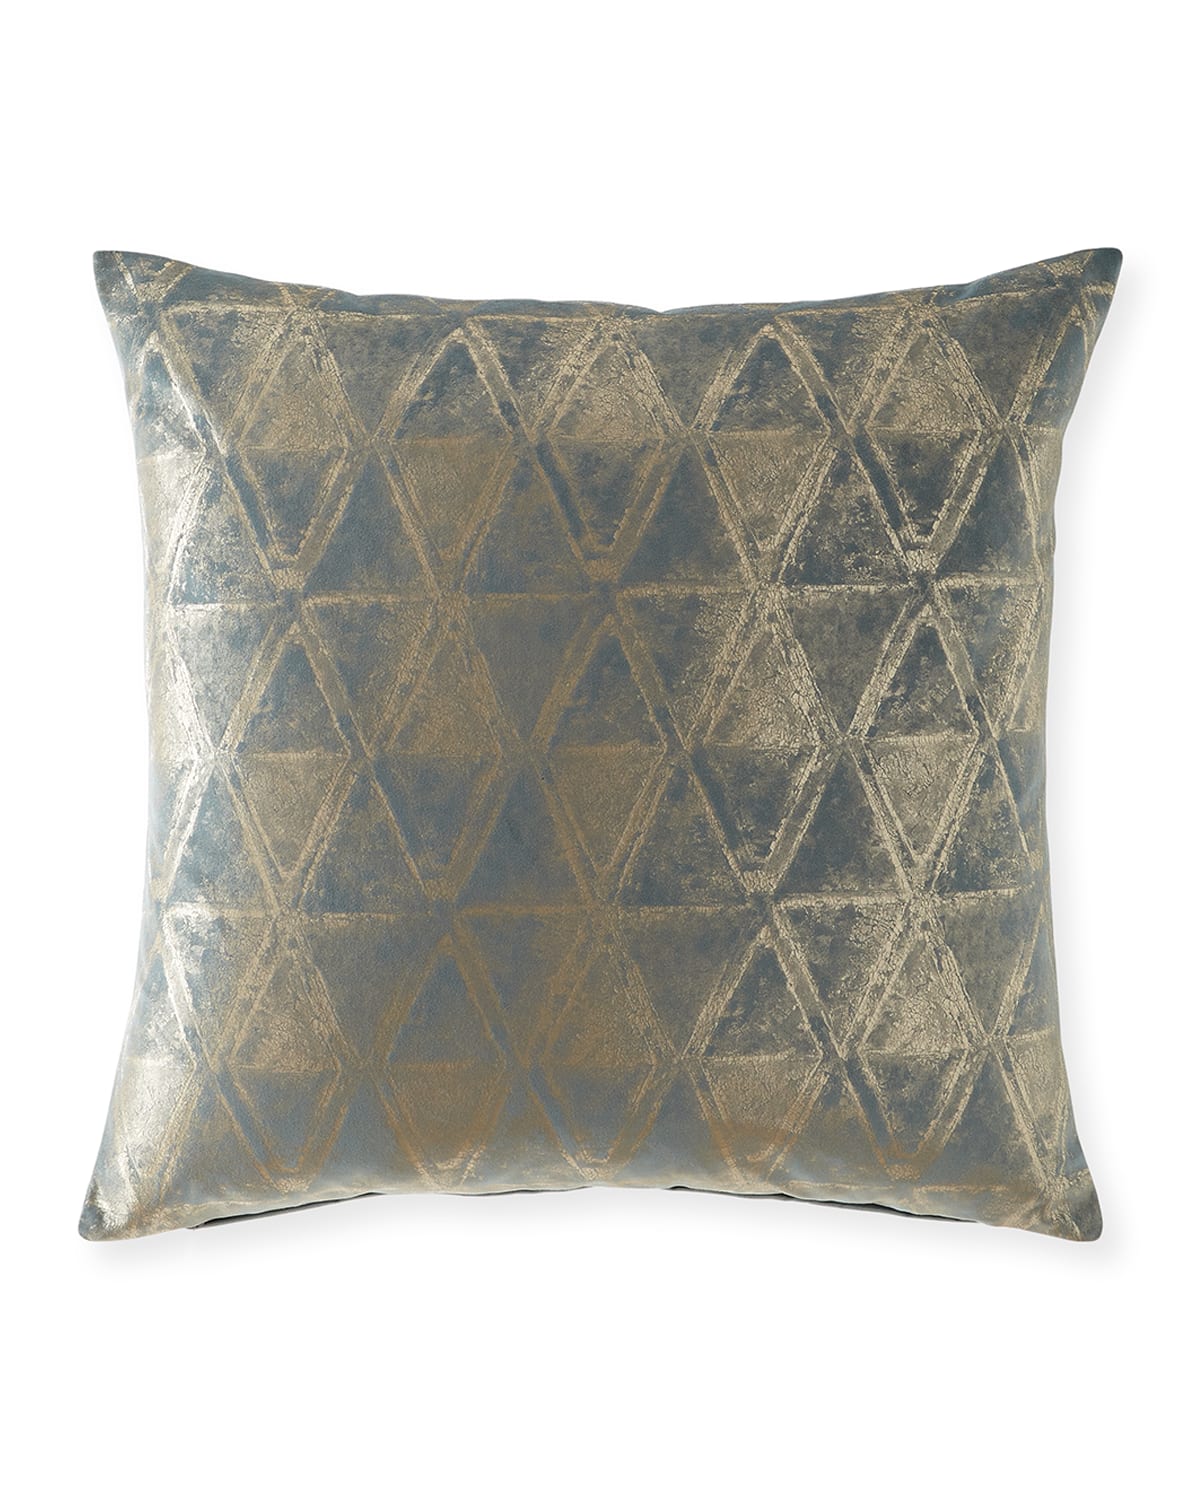 Shop Eastern Accents Eudora Cornflower Decorative Pillow